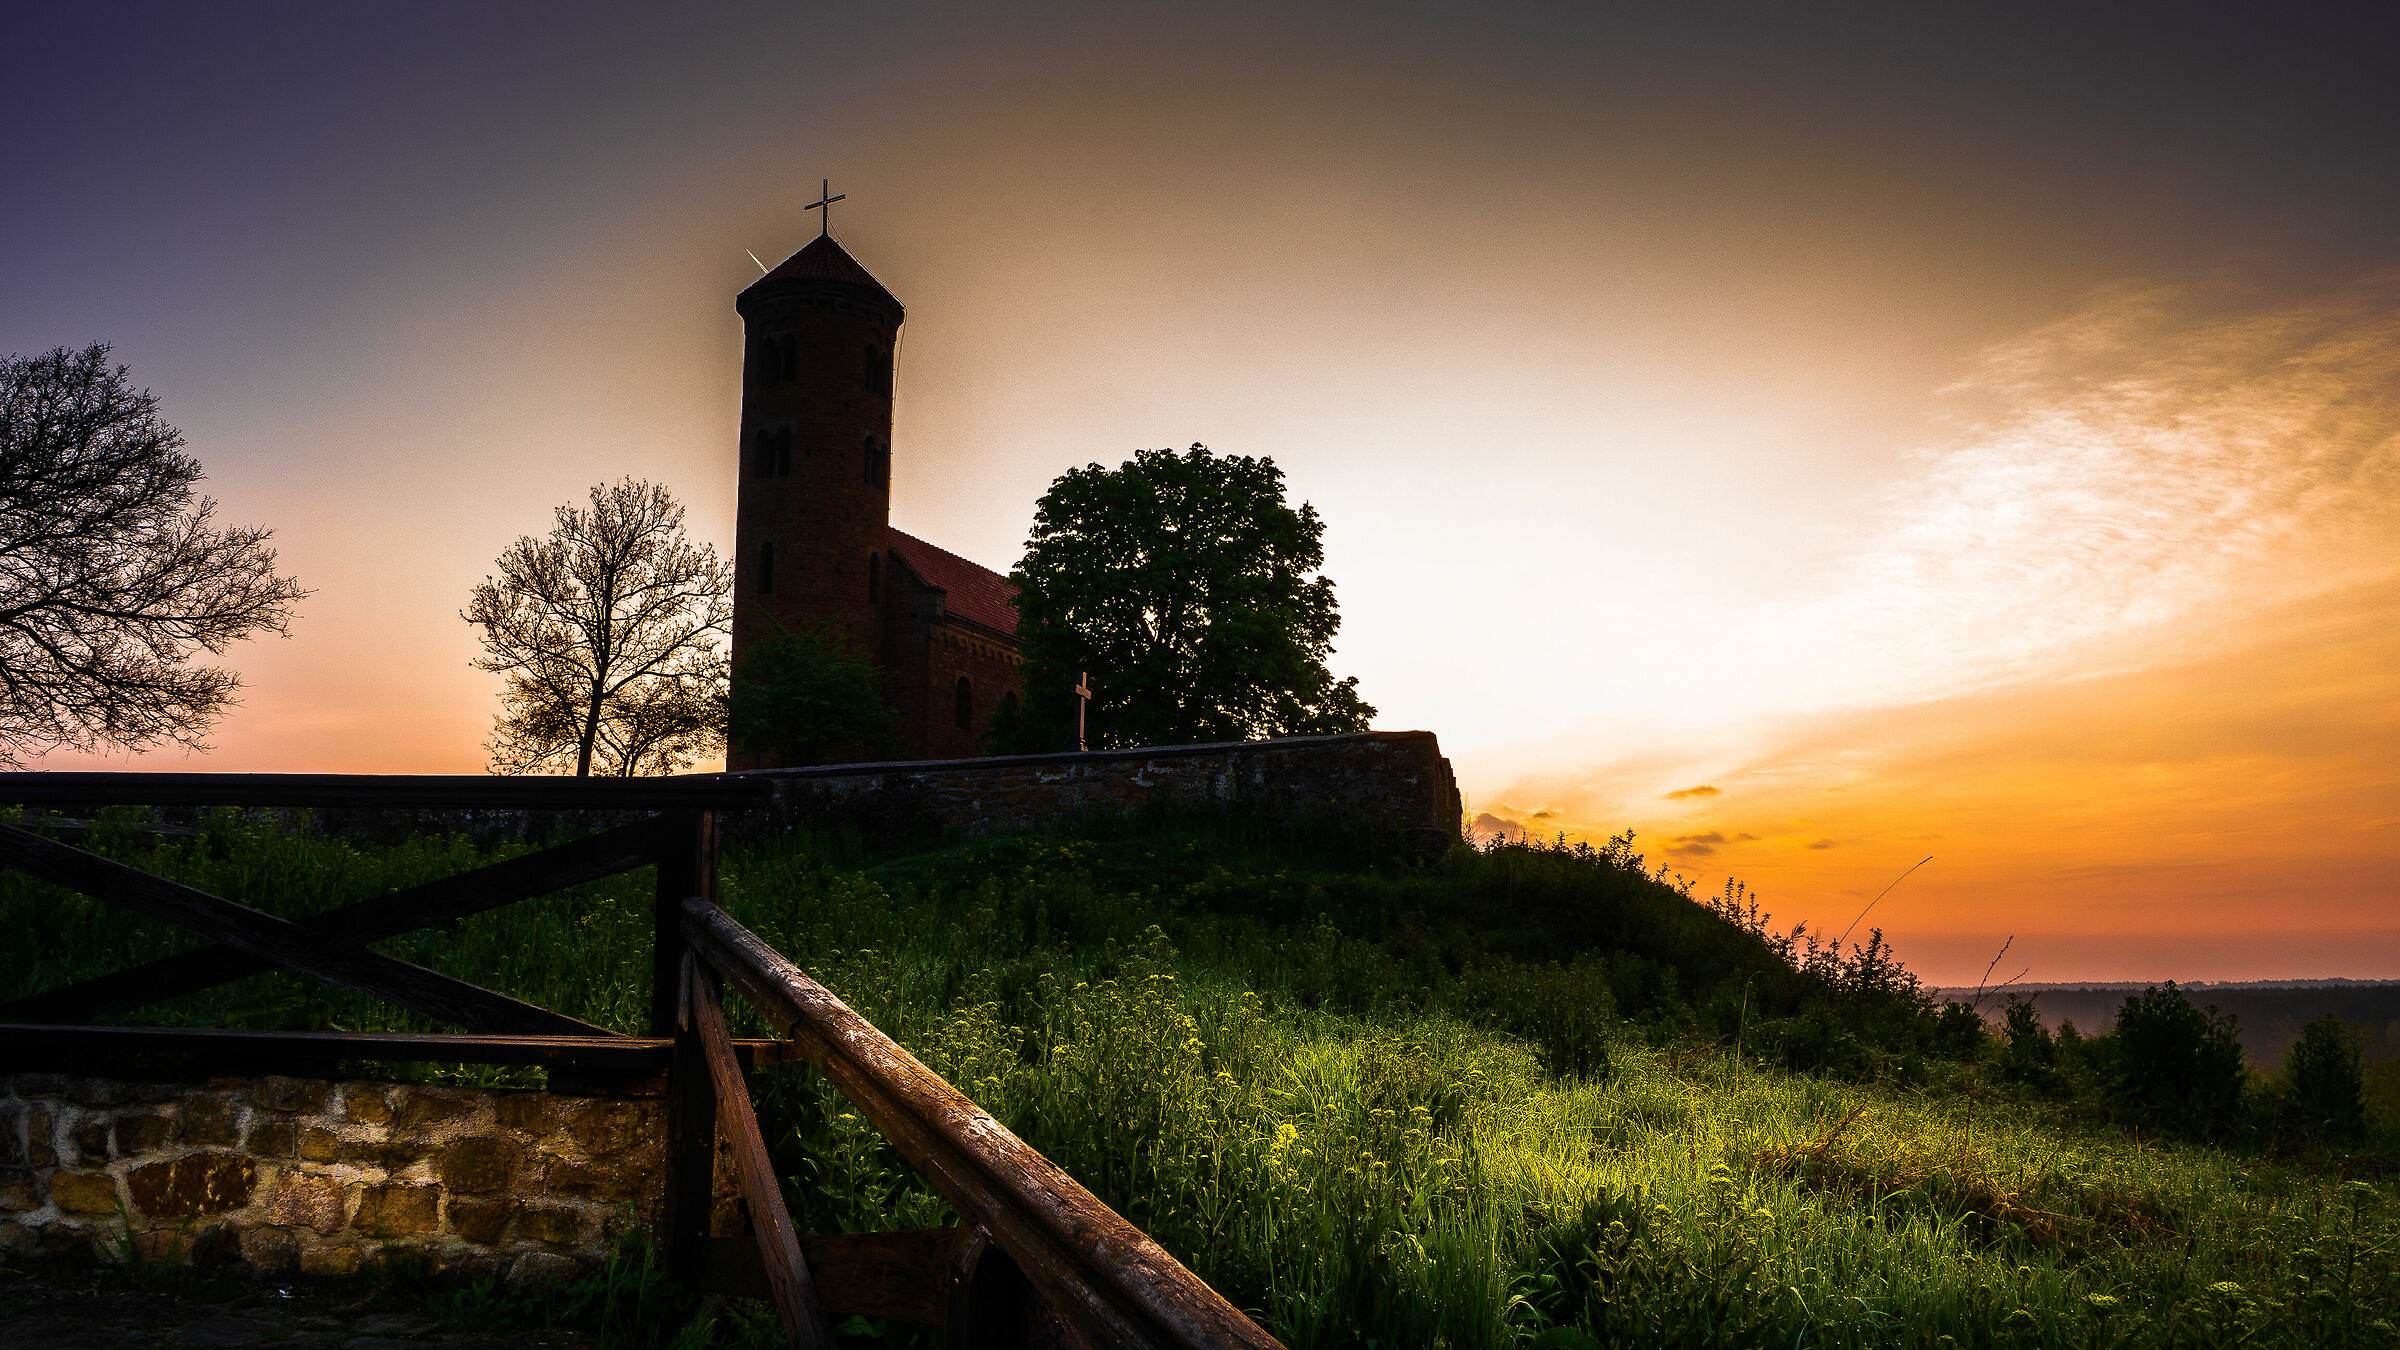 Sunrise over the church in Inowlodz...